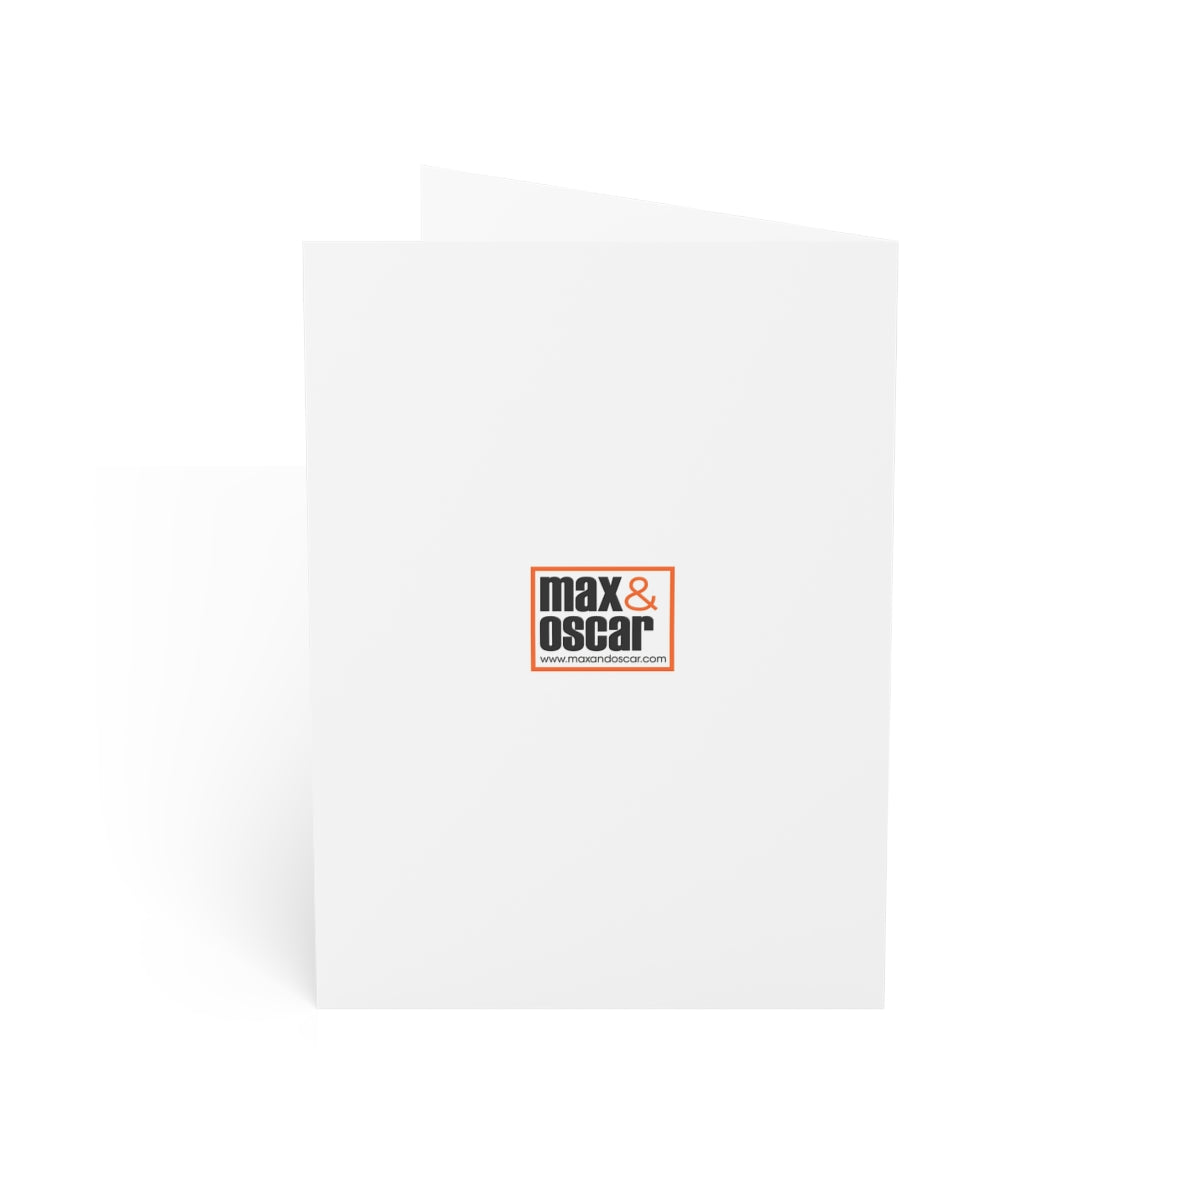 New Orleans Folded Greeting Cards + Envelopes (10pcs)